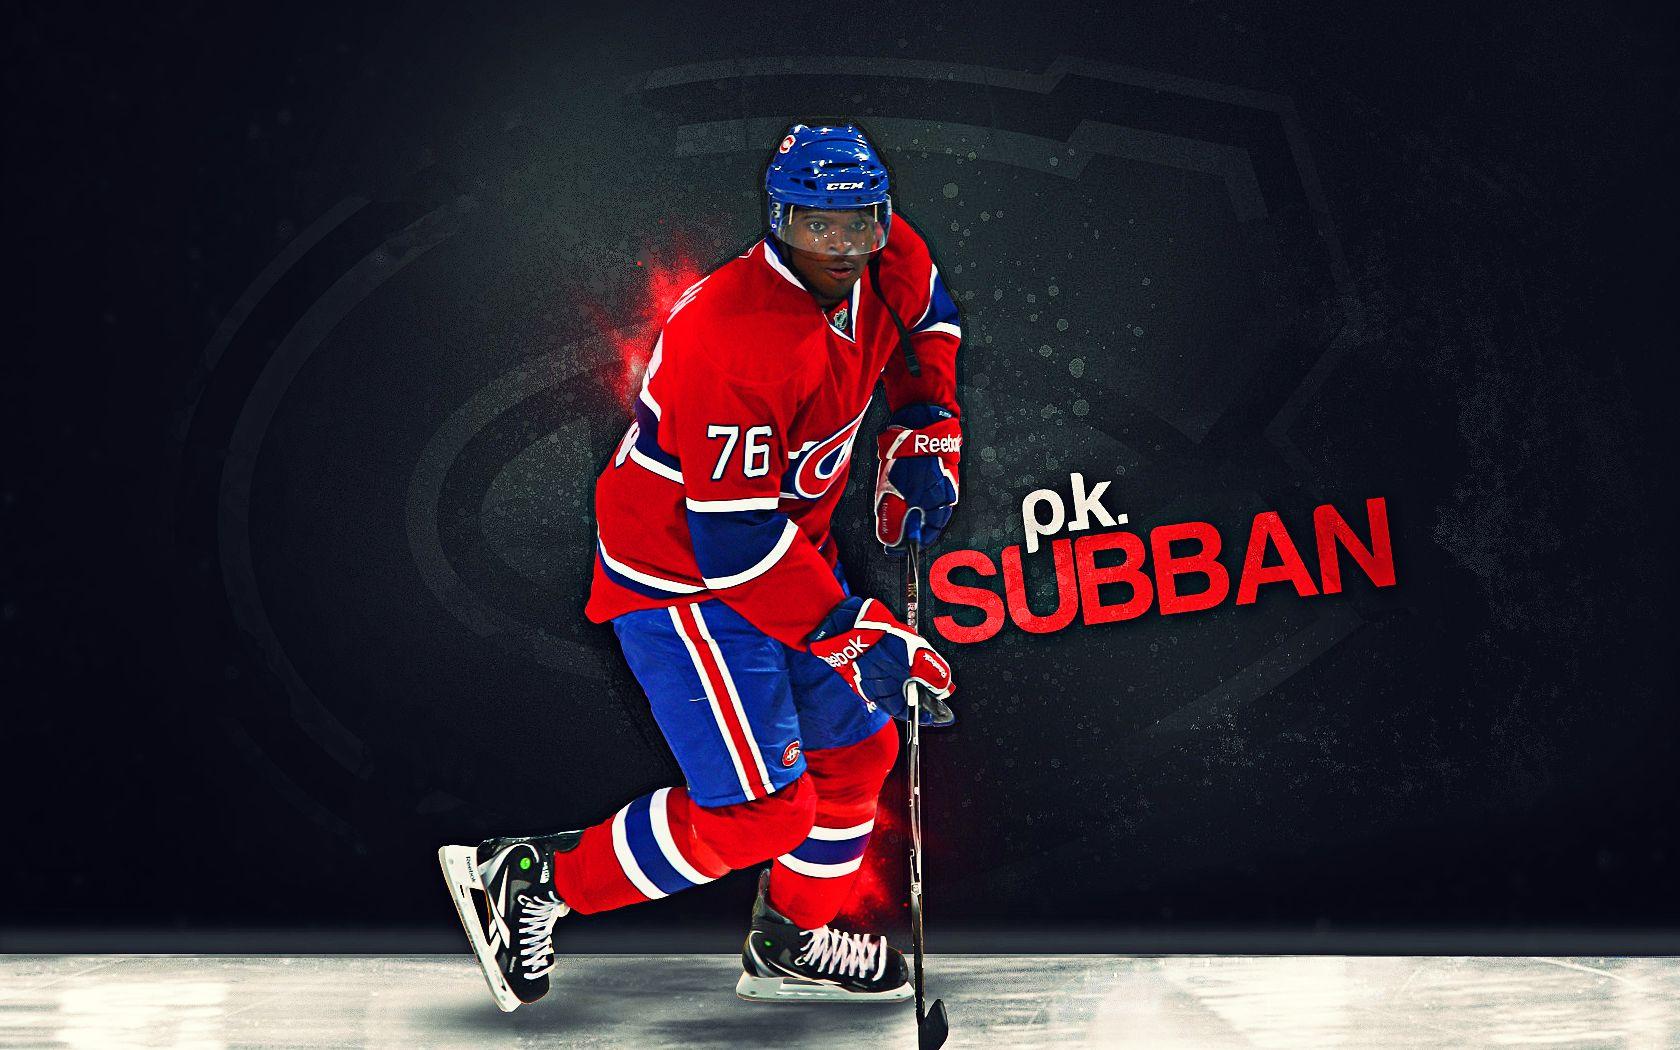 Montreal Canadiens image Montreal Canadiens. K. Subban HD